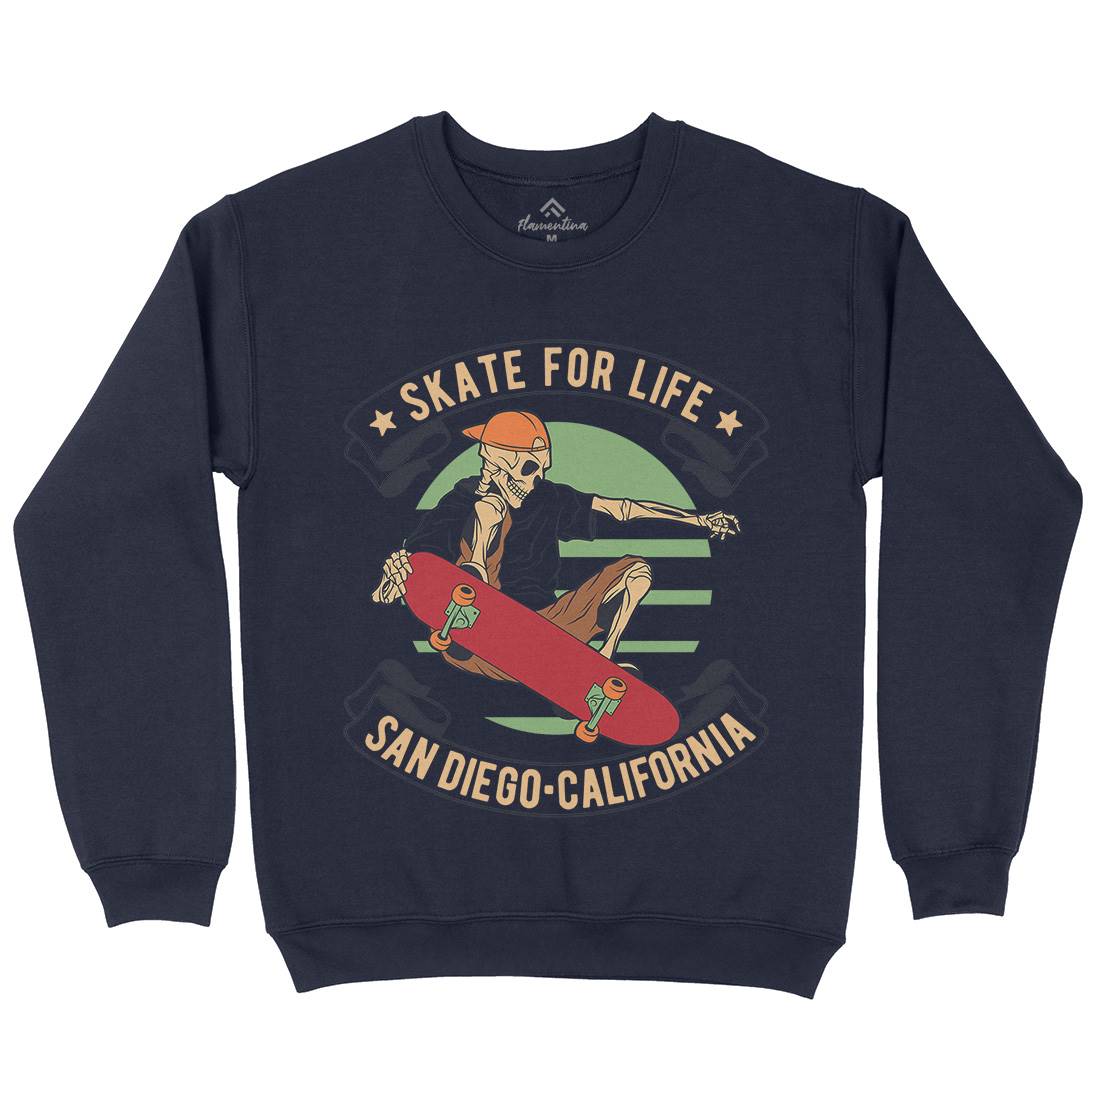 For Life Mens Crew Neck Sweatshirt Skate D970